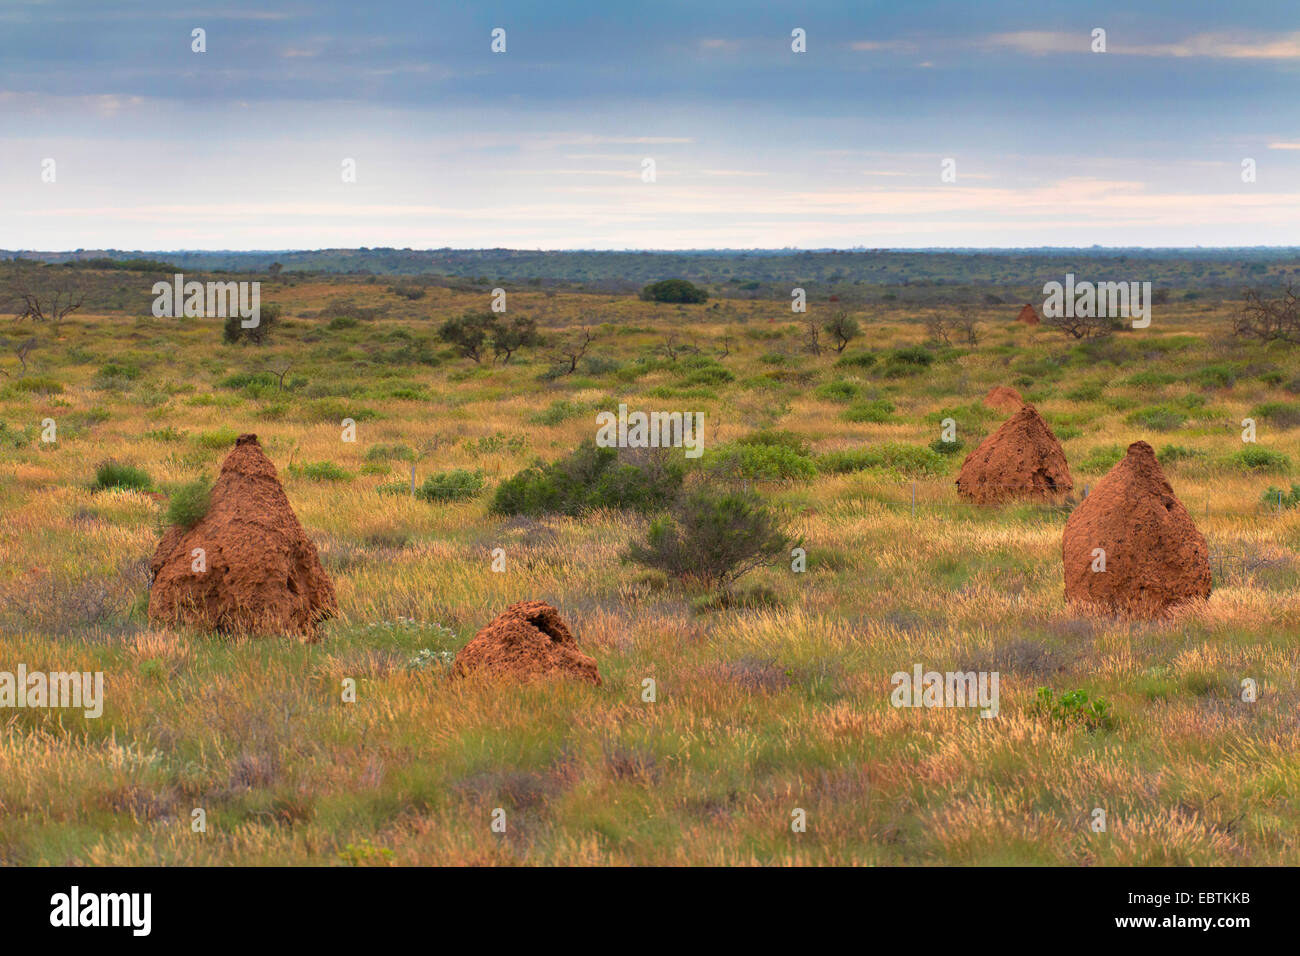 termite (Isoptera), termites nests in the steppe, Australia, Western Australia, Cardabia Stock Photo